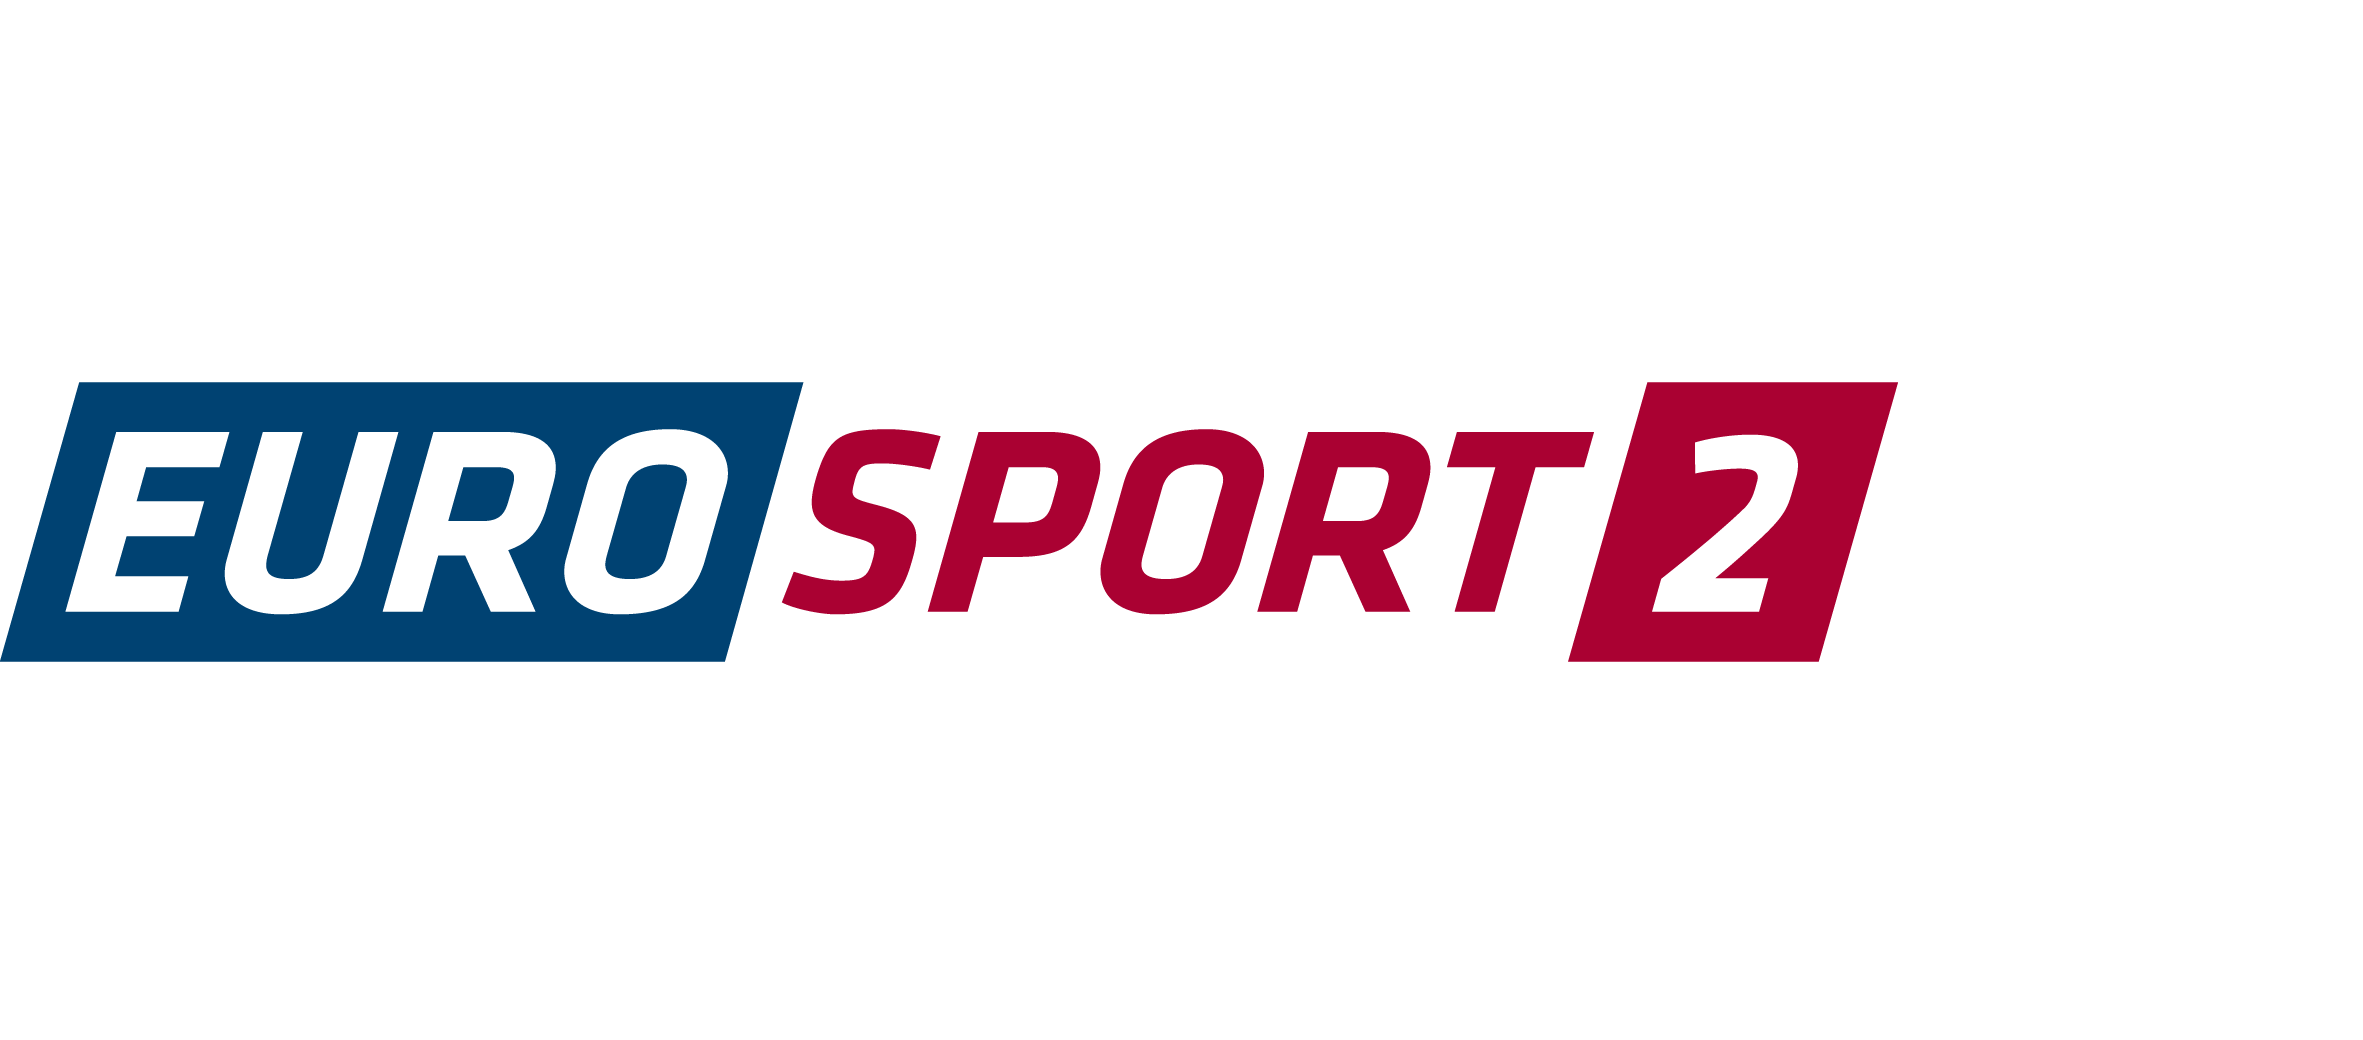 Eurosport 2.